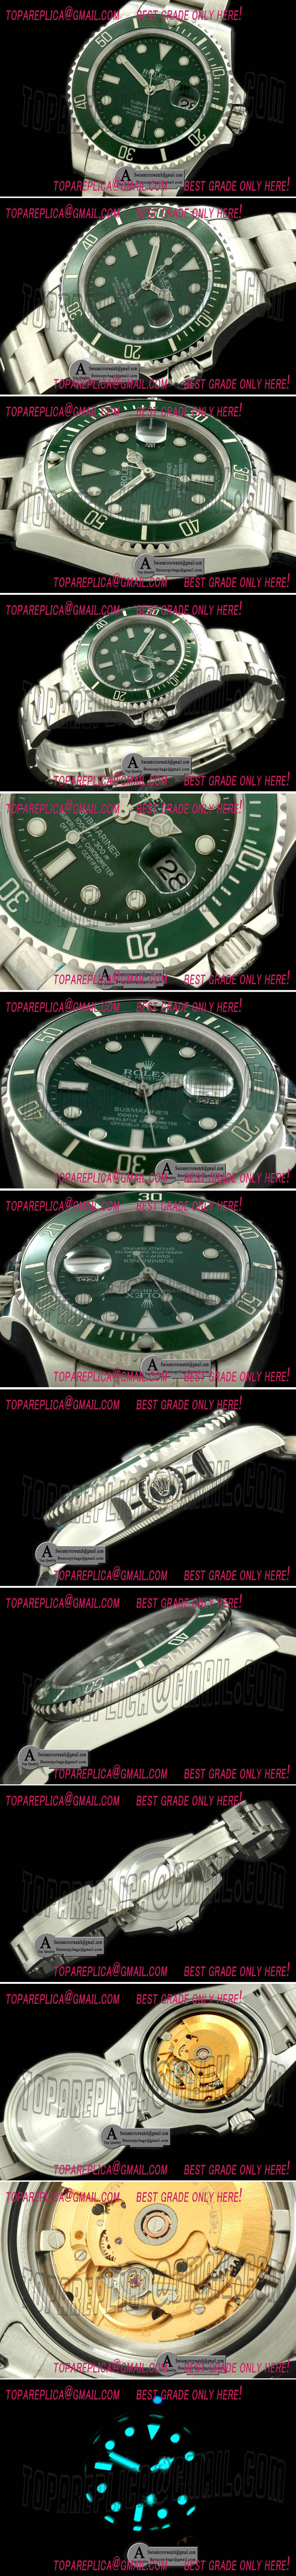 Rolex 116610 2010 Submariner SS Green Asian 2836 Replica Watches